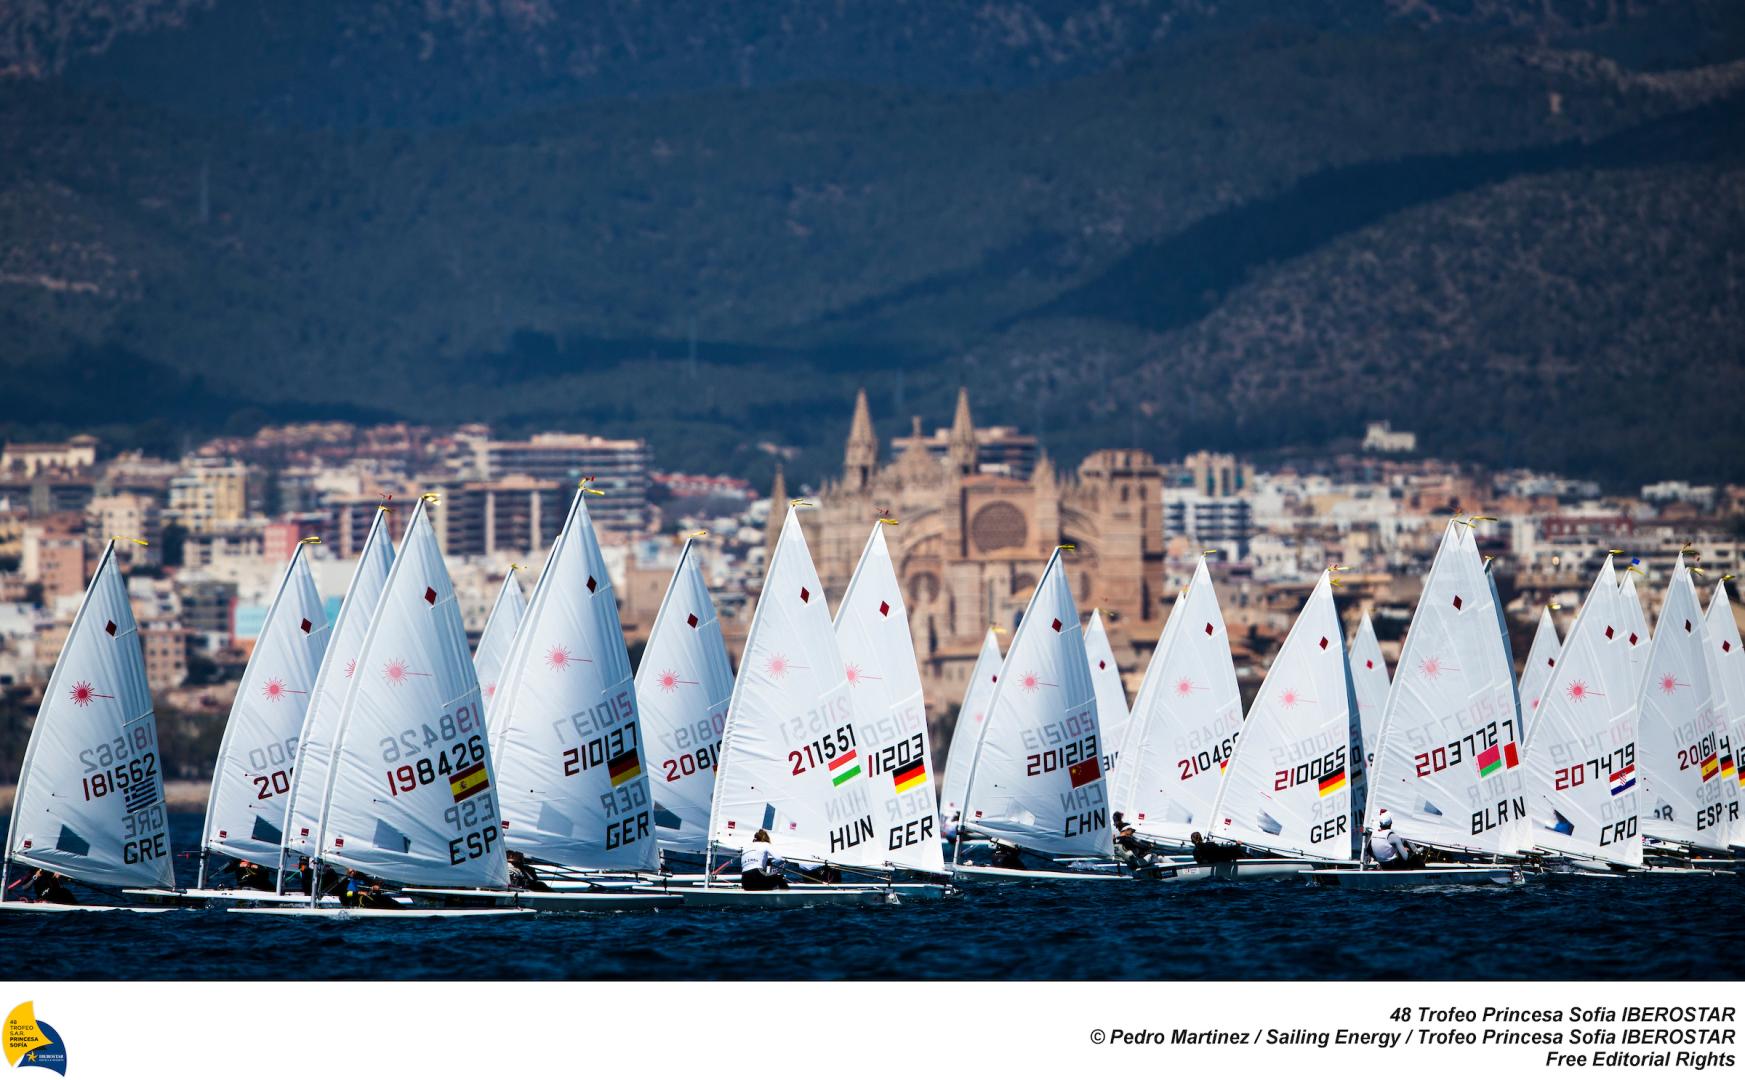 Trofeo Princesa Sofía: The first 2018 major Olympic sailing event